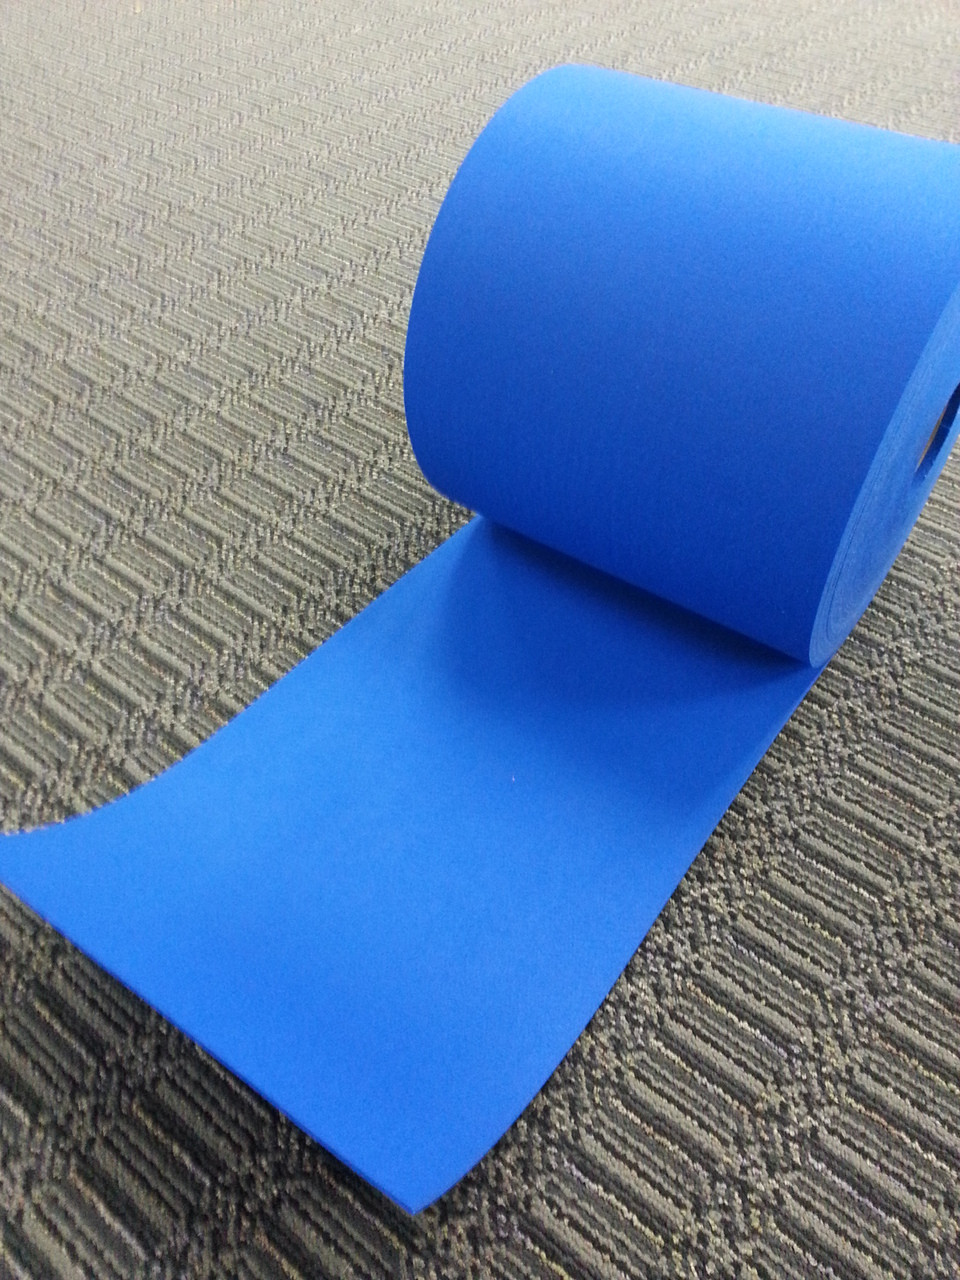 Tuf Cut Vibrant Blue Felt Roll 10 wide x 100' long x .100 thick $39.99